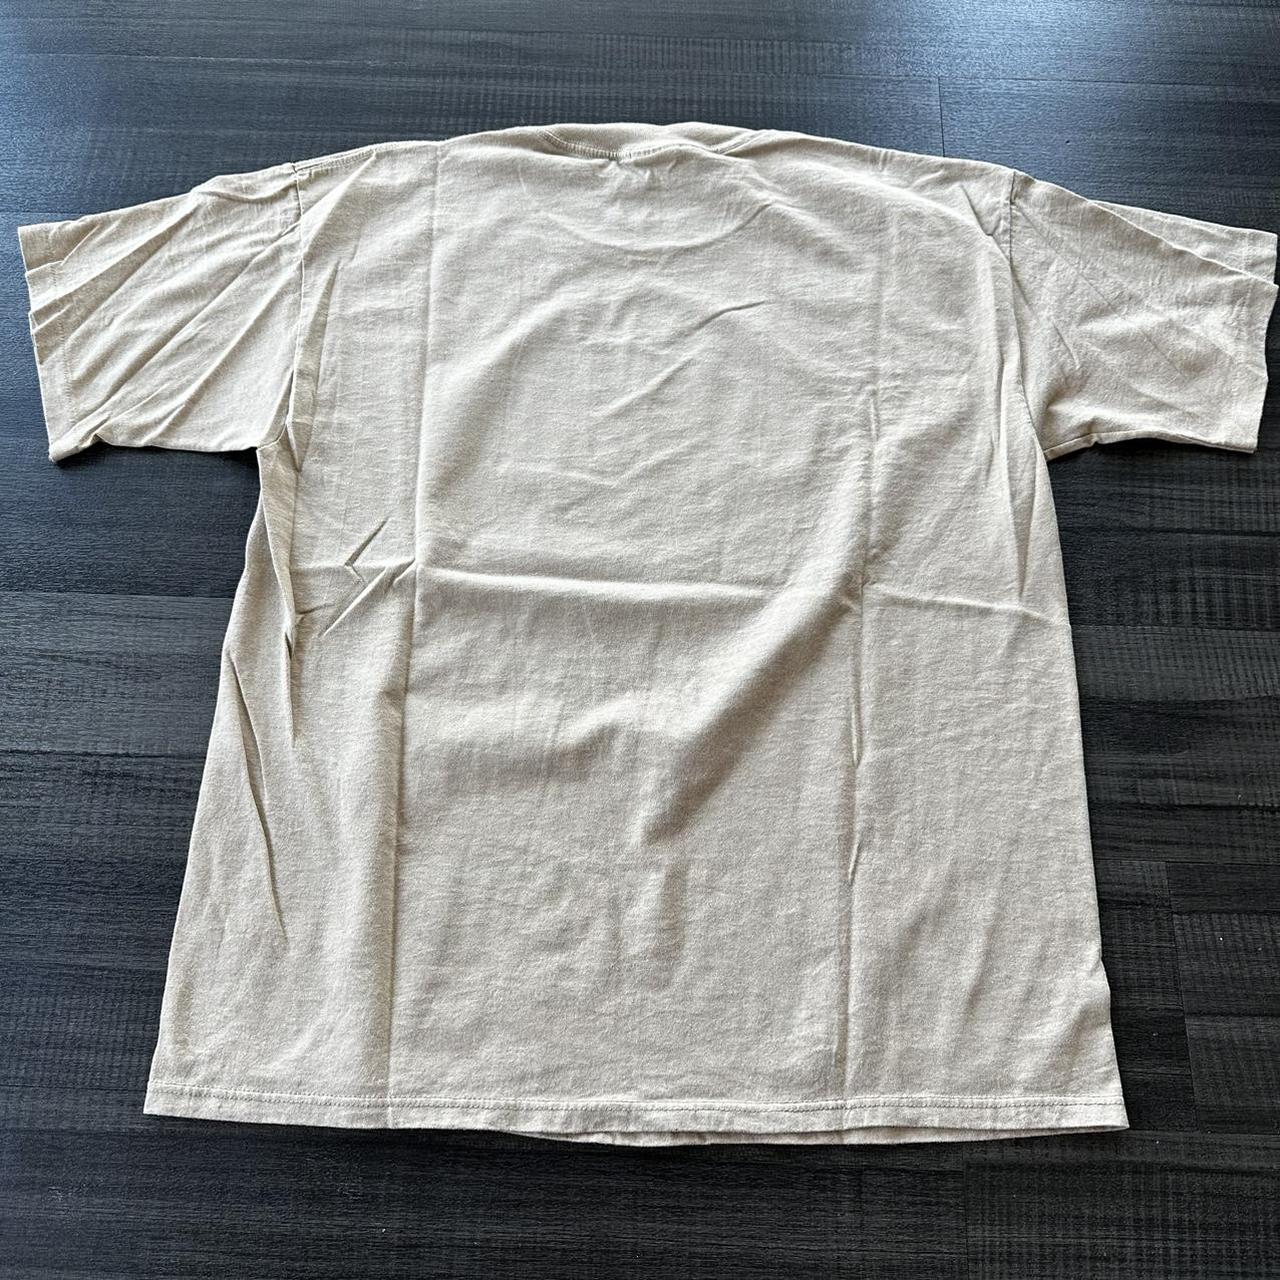 Vintage 90s “Ten Pound Club” Fishing T-Shirt $4.99 - Depop